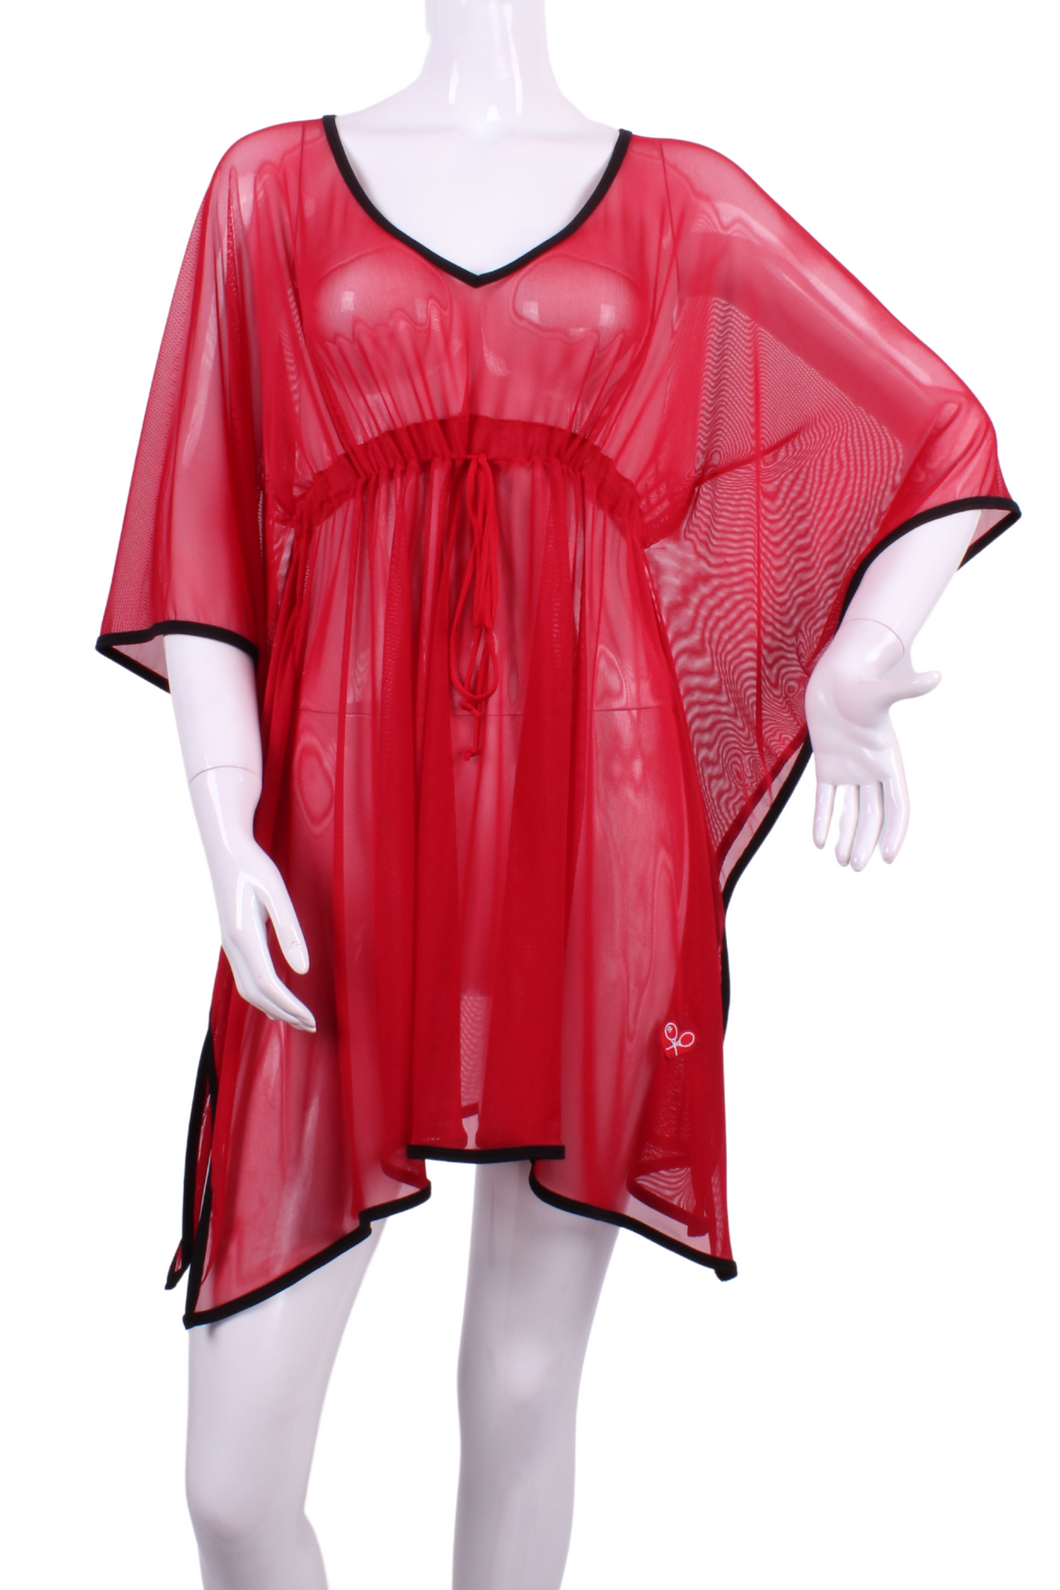 Red Cleo Sneakers to Flip Flops Tennis Dress - I LOVE MY DOUBLES PARTNER!!!